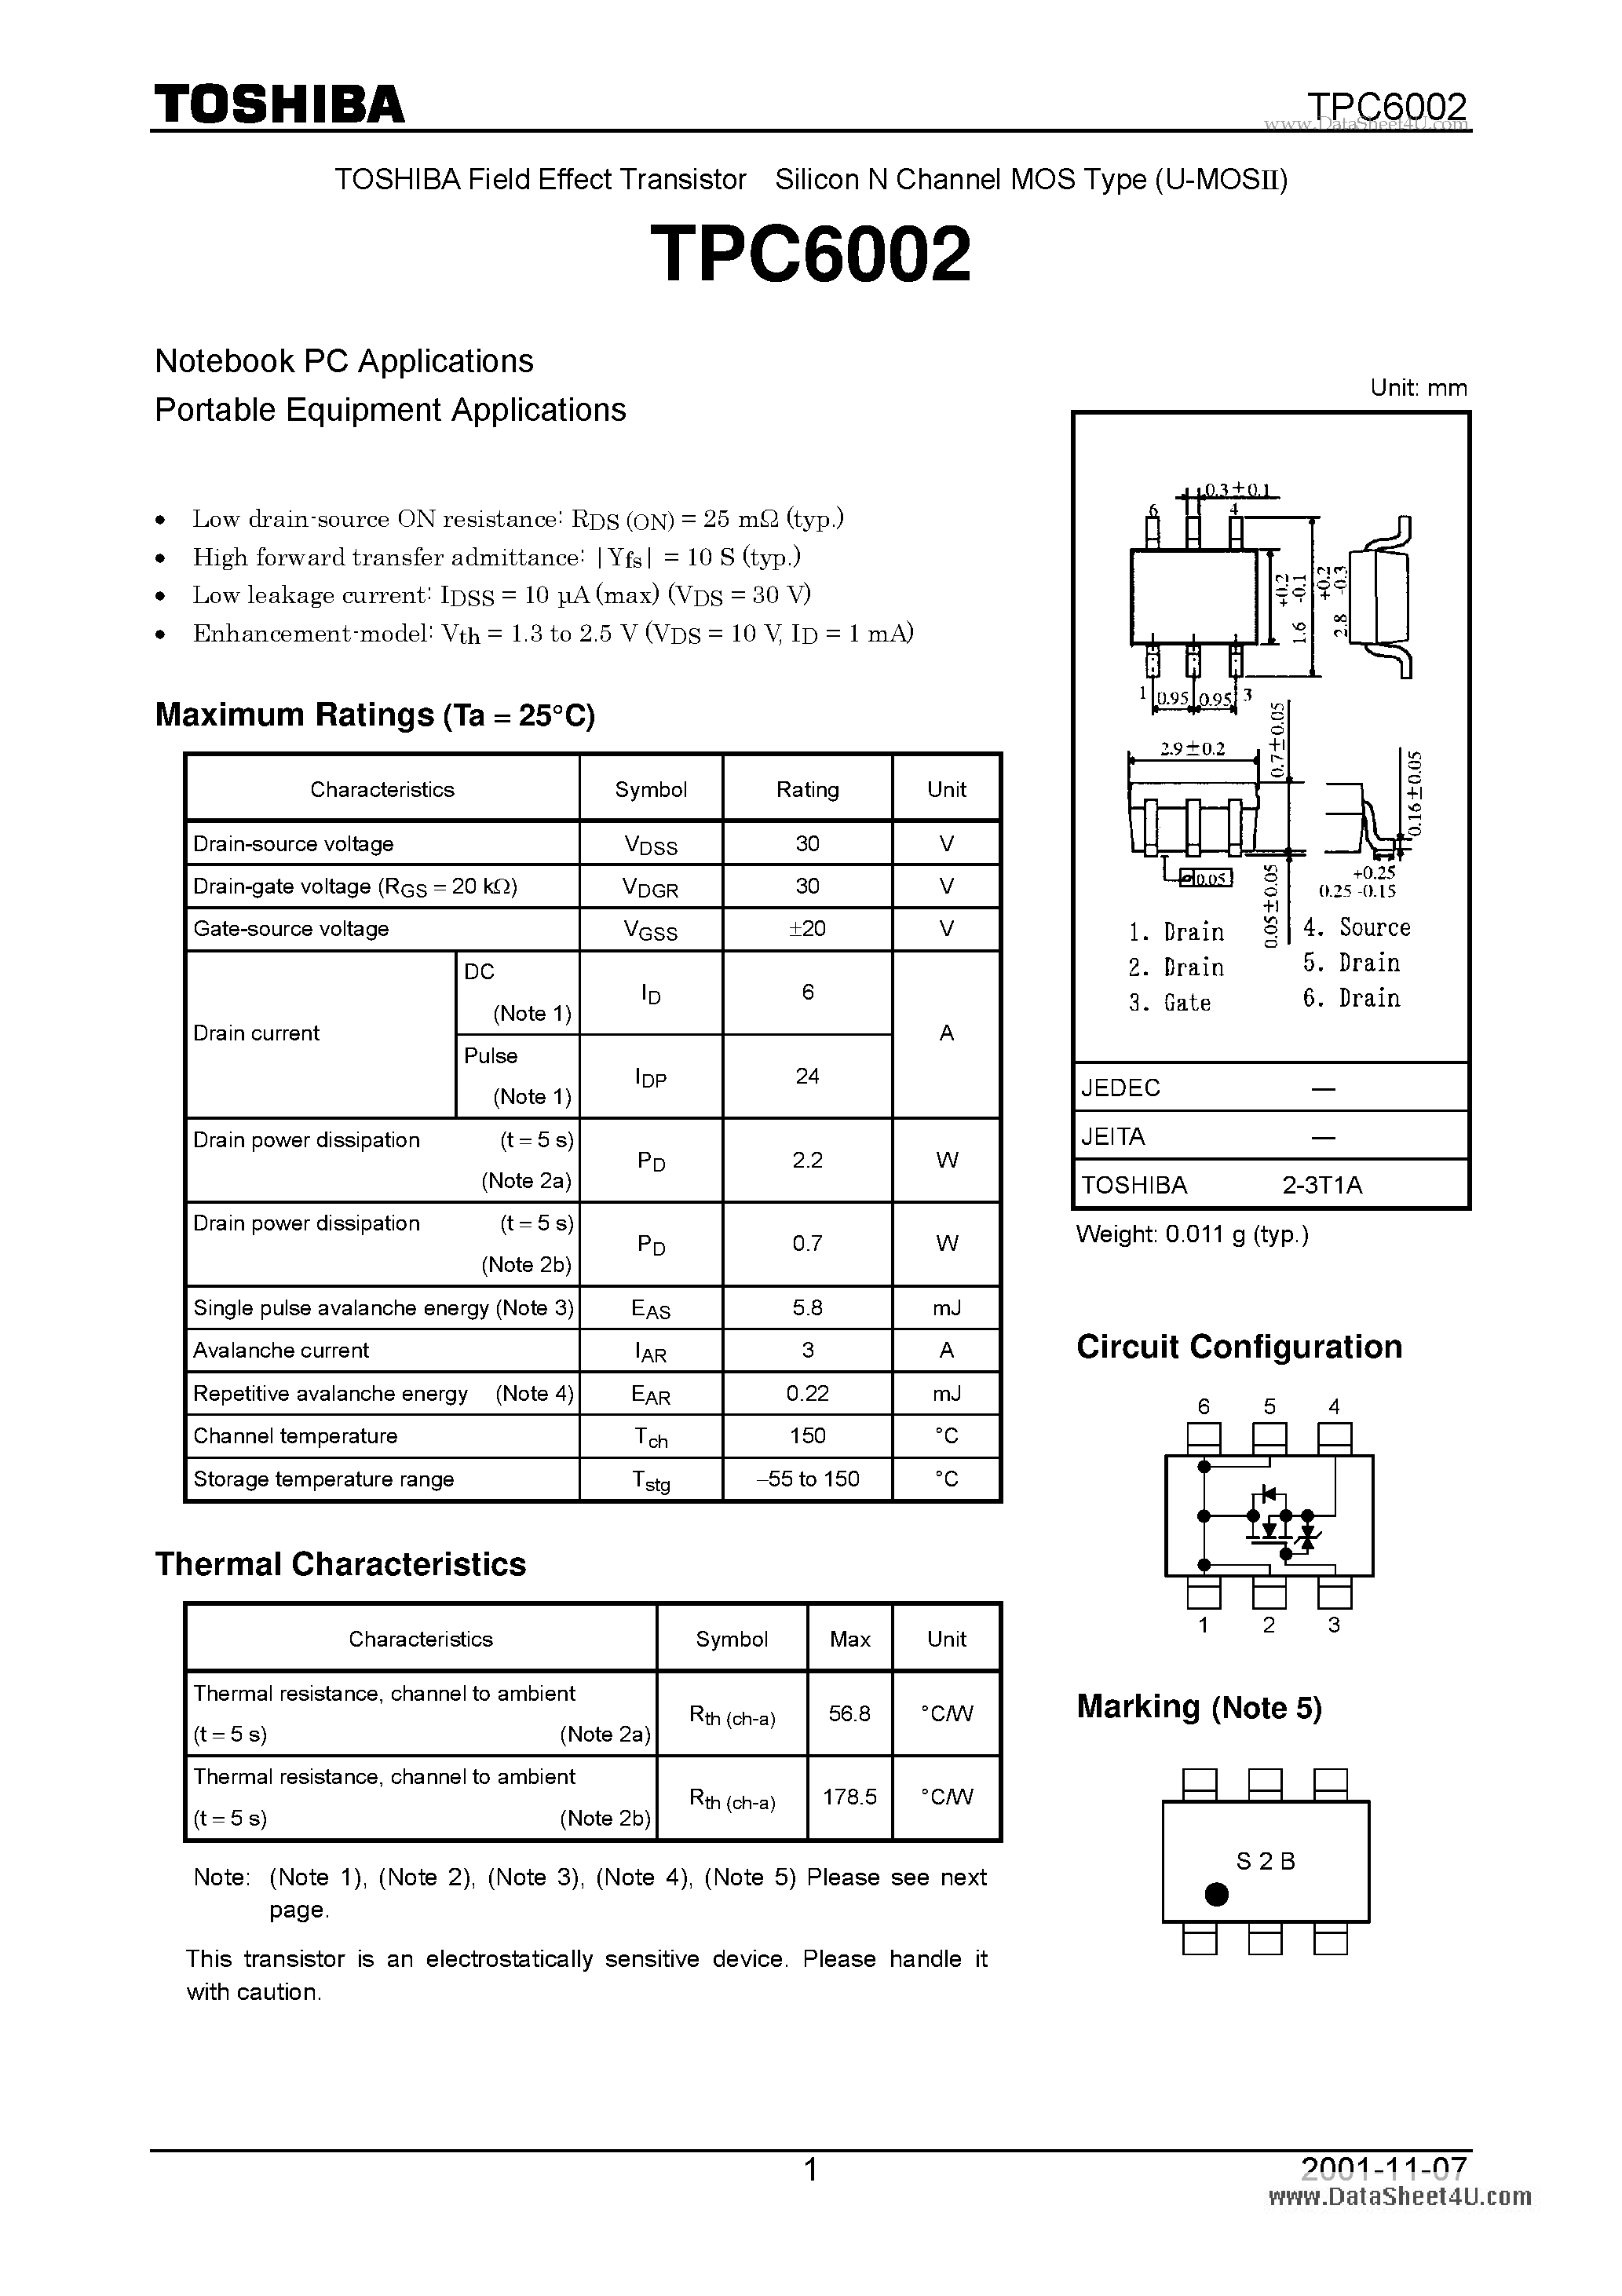 Datasheet TPC6002 - TOSHIBA Field Effect Transistor Silicon N Channel MOS Type (U-MOSII) page 1